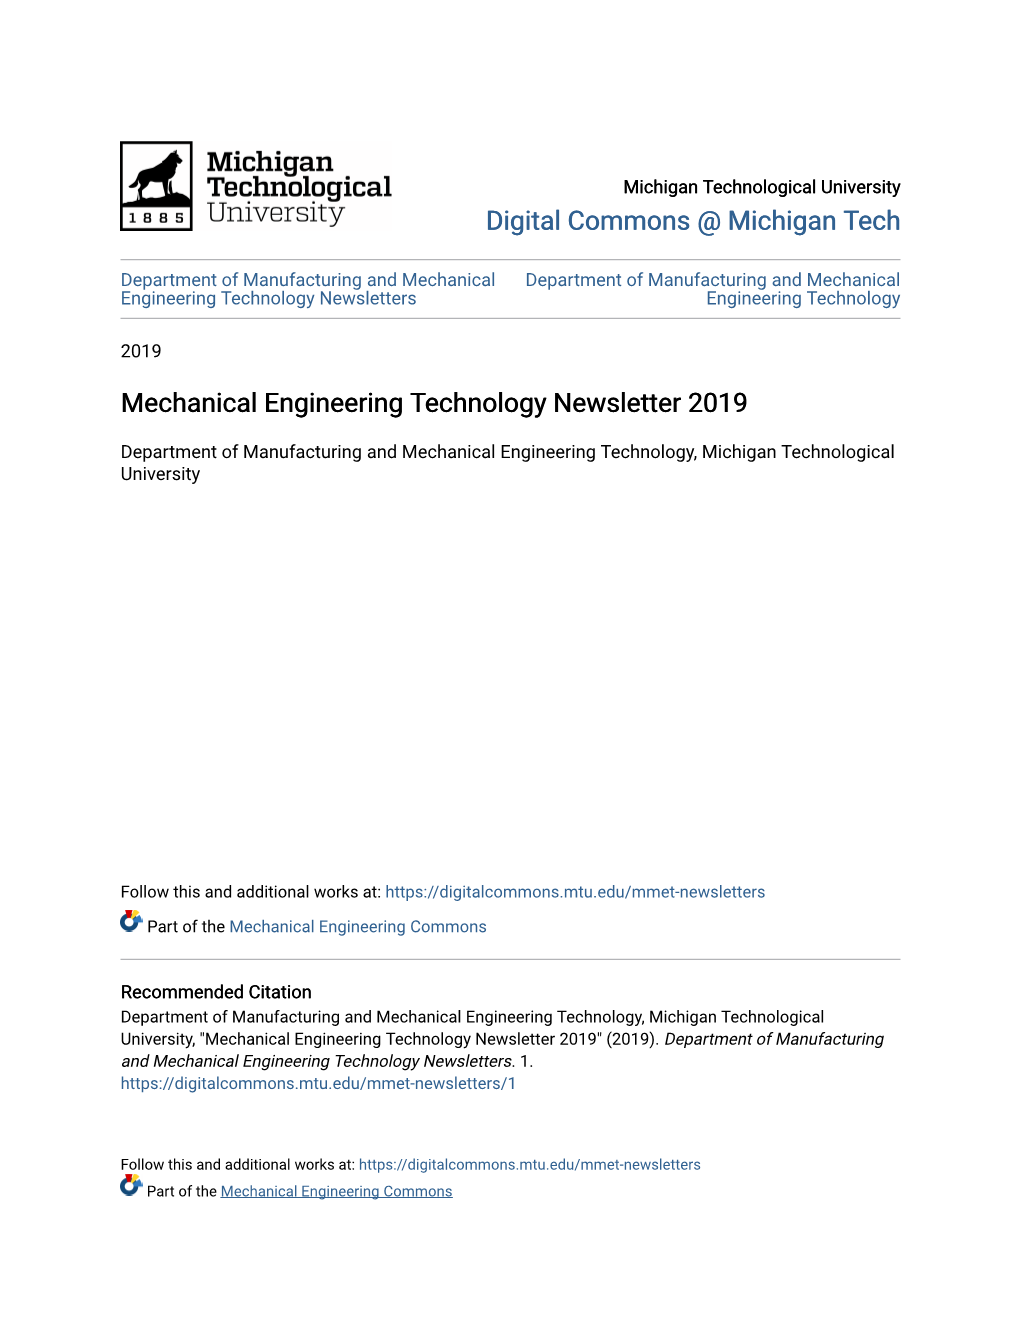 Mechanical Engineering Technology Newsletter 2019